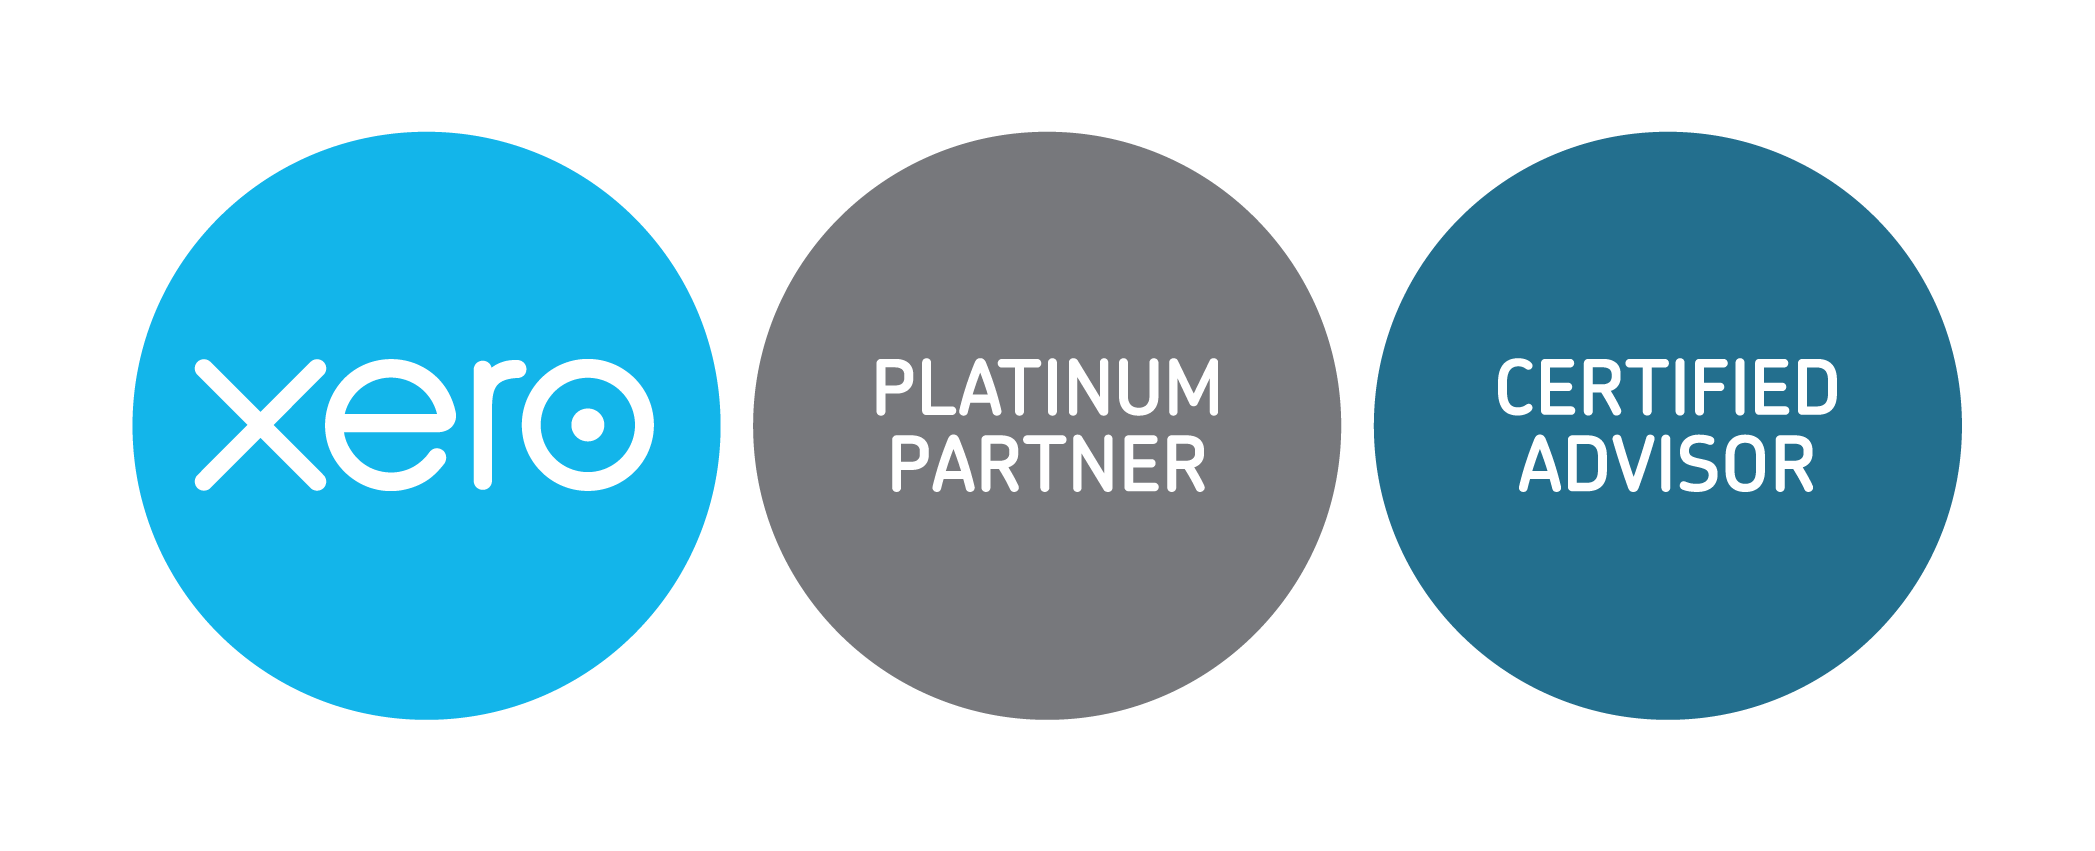 xero platinum partner logo and certified advisor badge